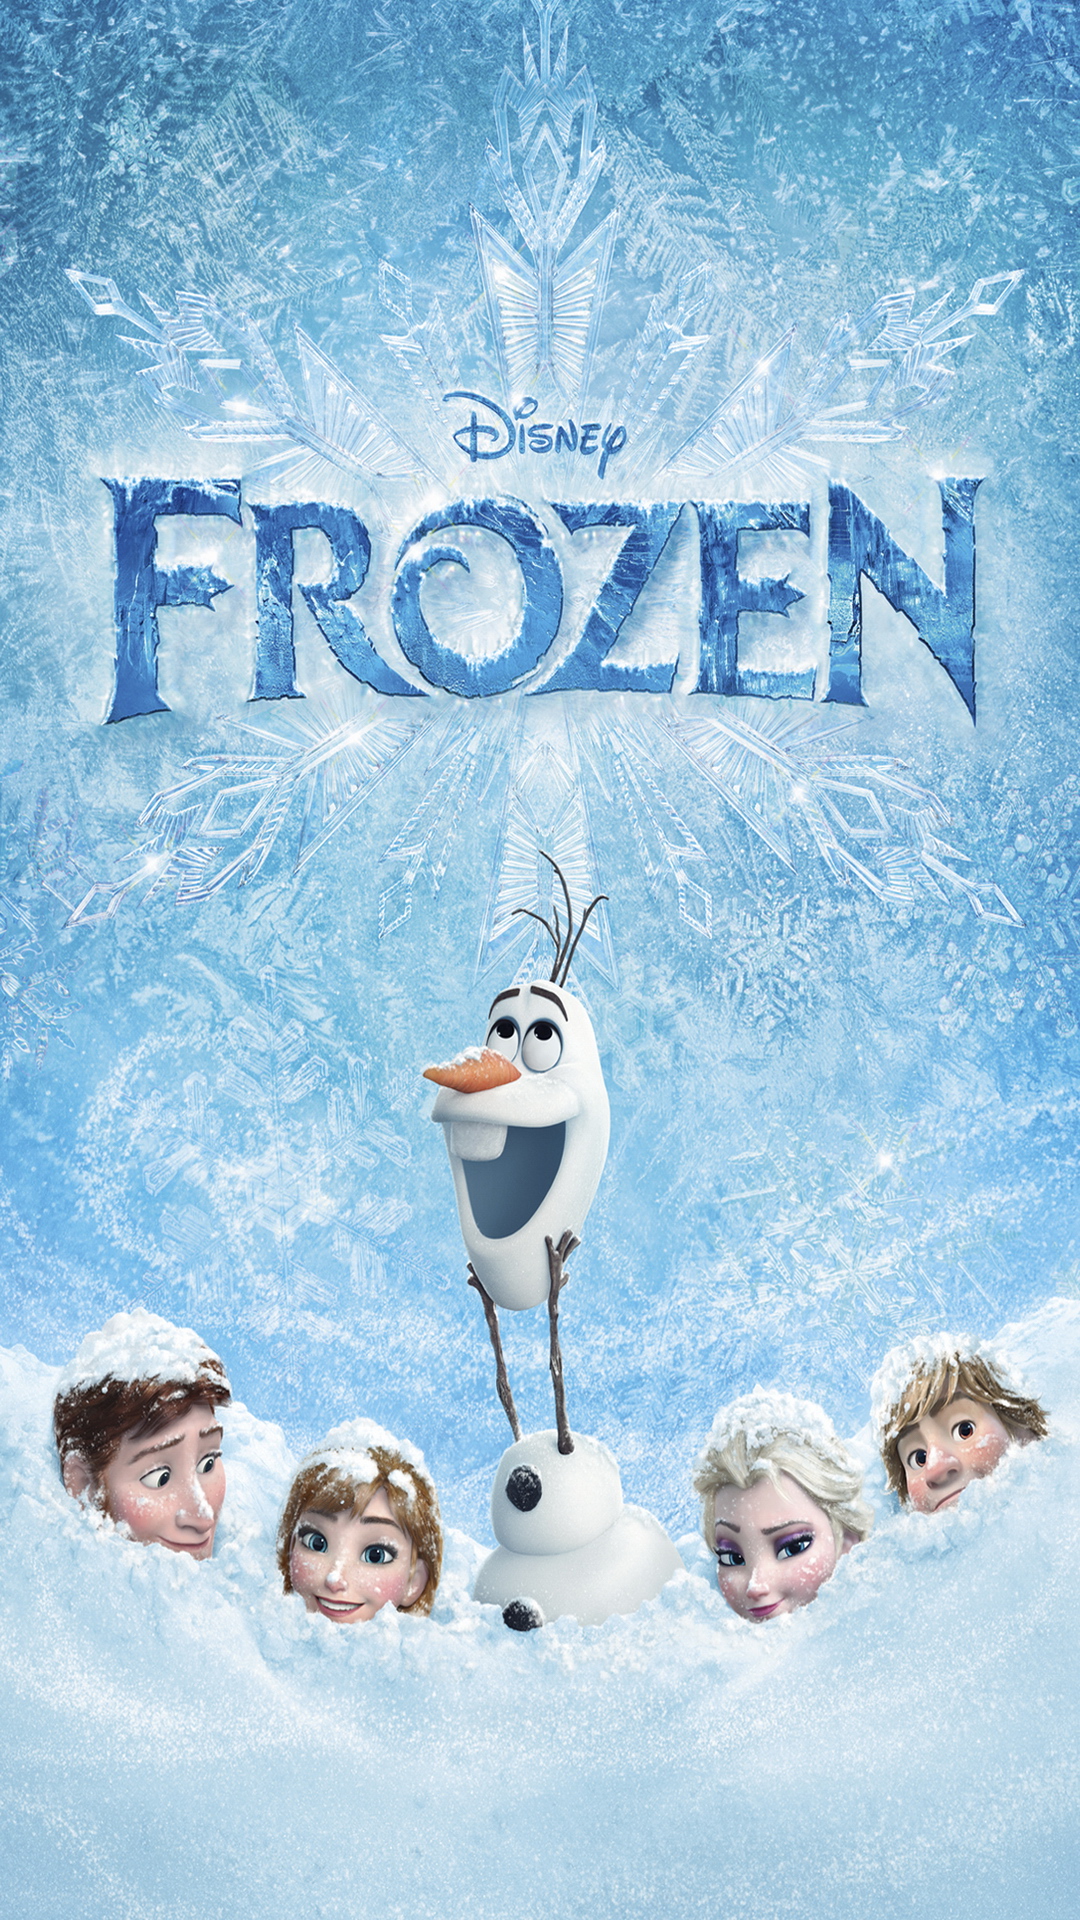 HD Disney Frozen Wallpaper For Mobile Phone